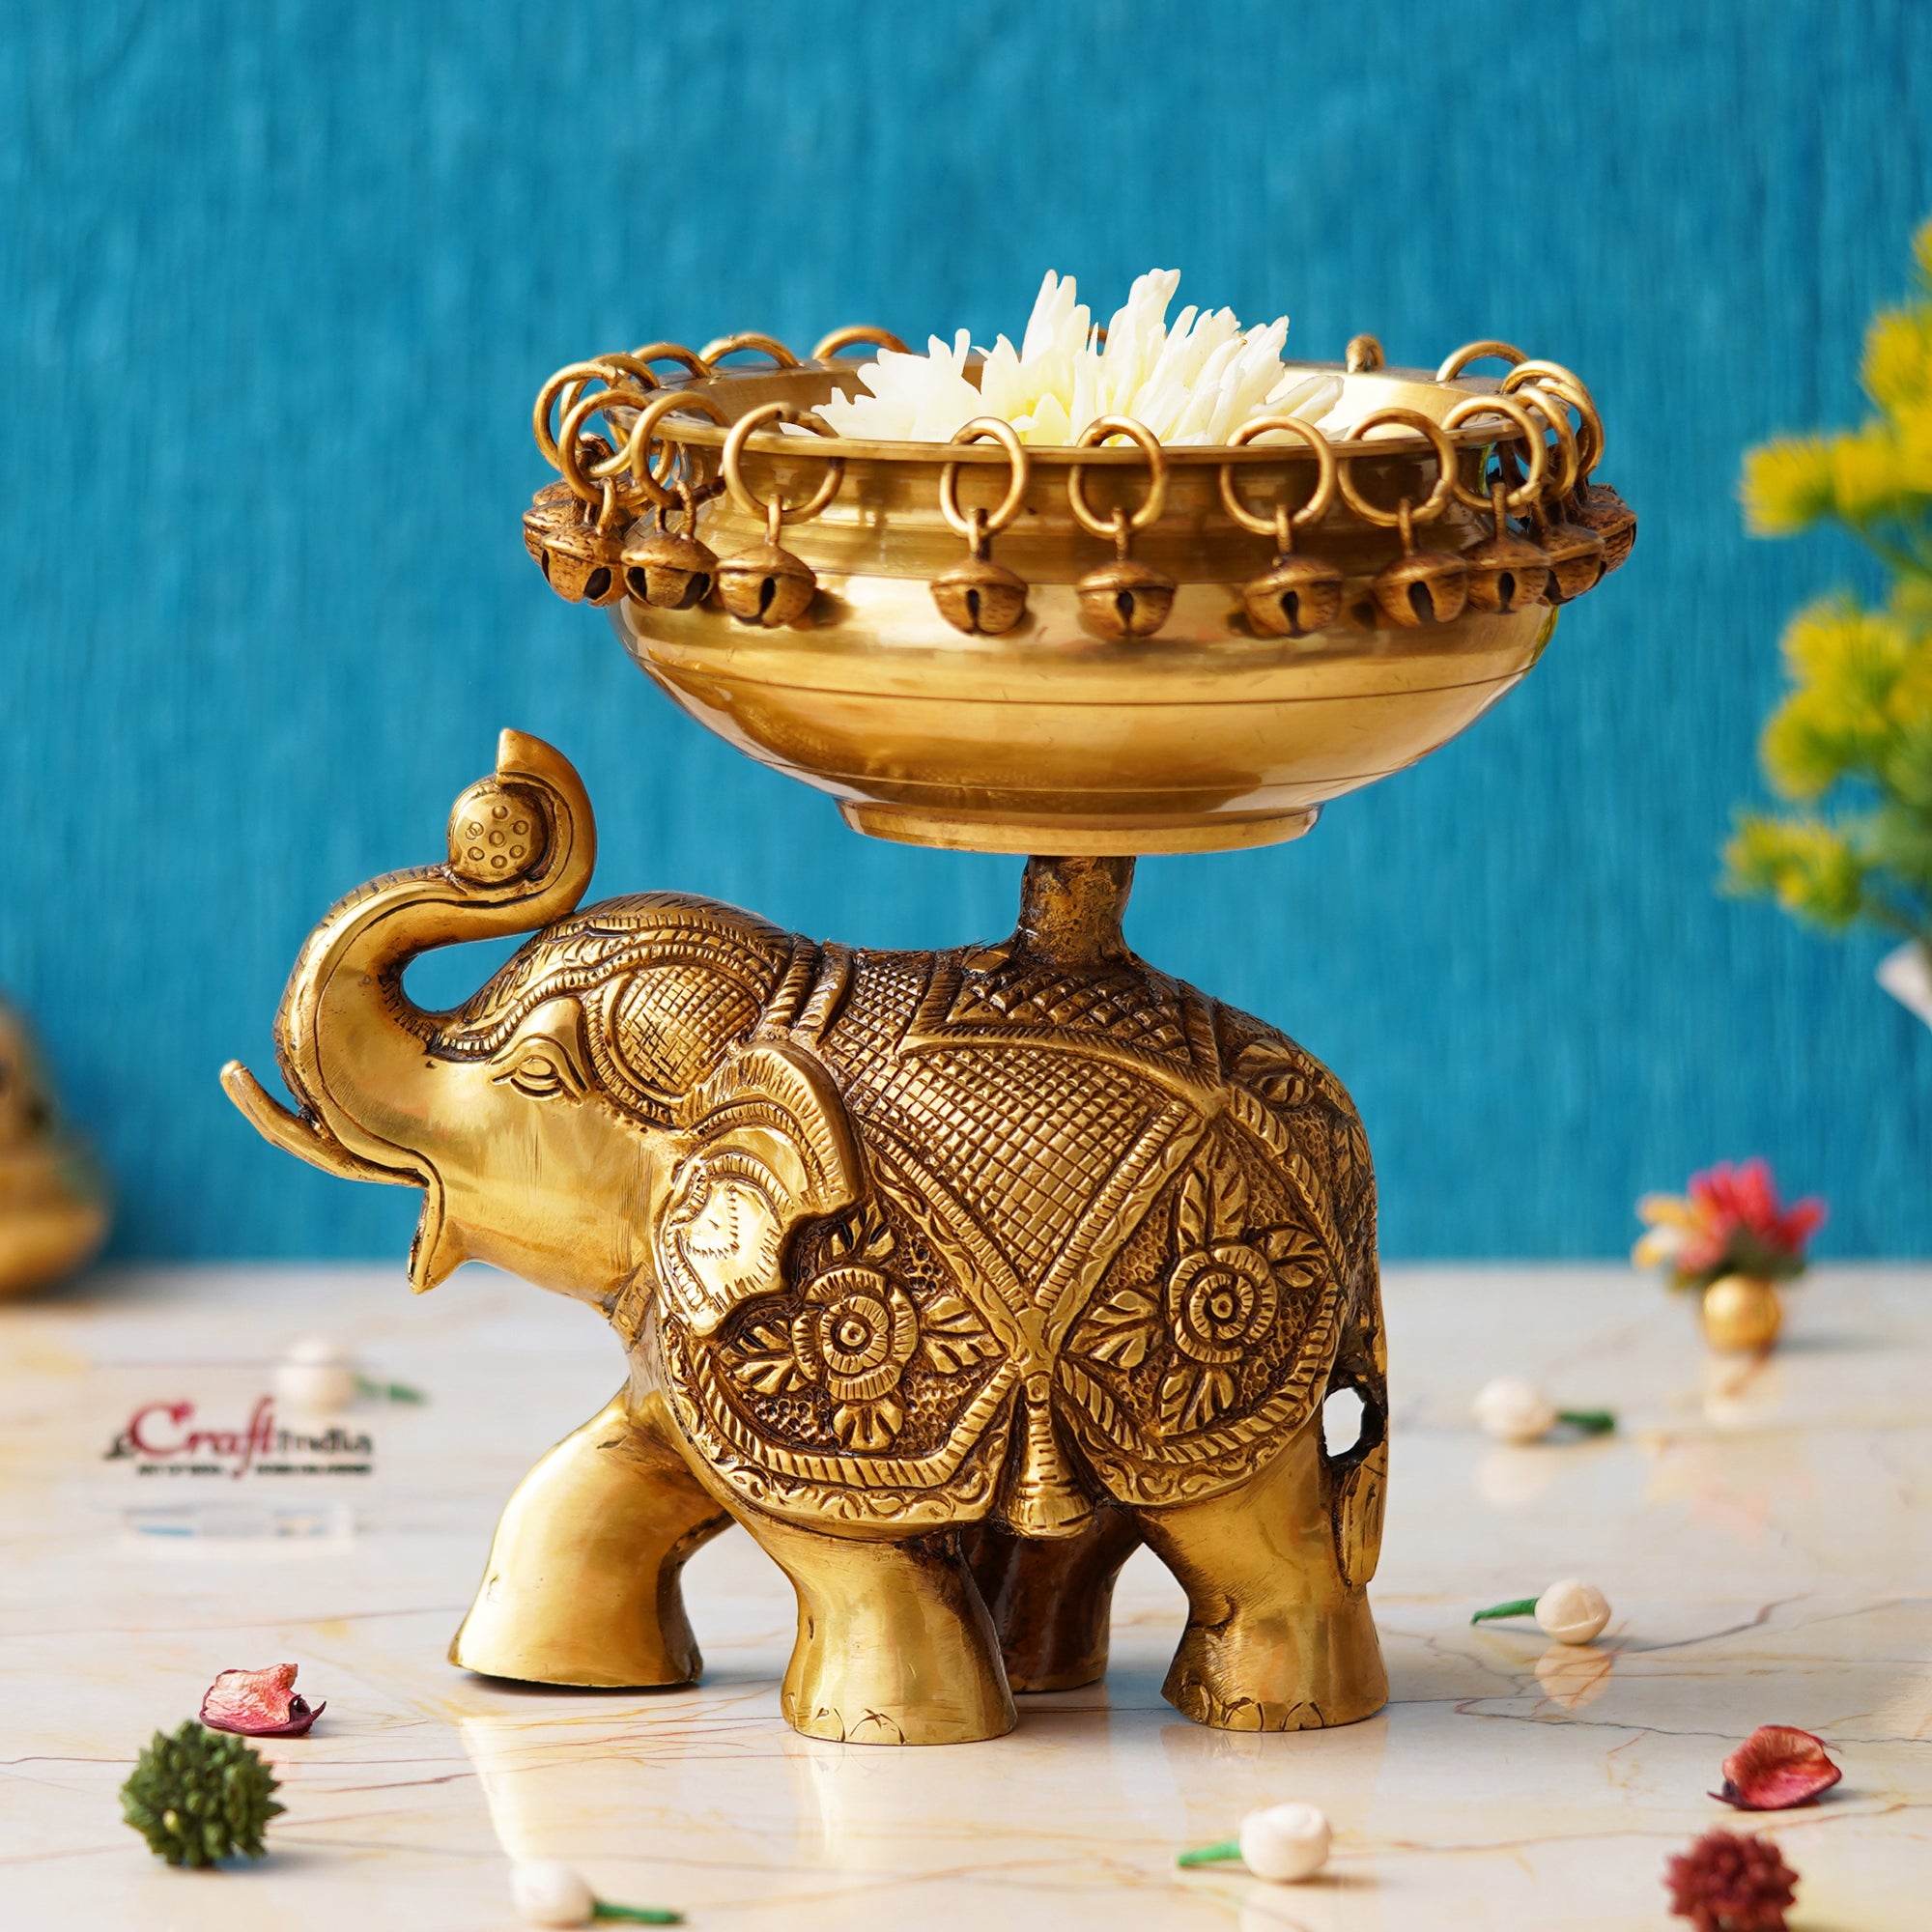 Golden Brass Urli on Elephant Statue with Bells for Floating Flowers - Ethnic Design Decorative Showpiece for Home & Office Decor, Diwali Decoration - Gift for Housewarming, Navratri Festival 4